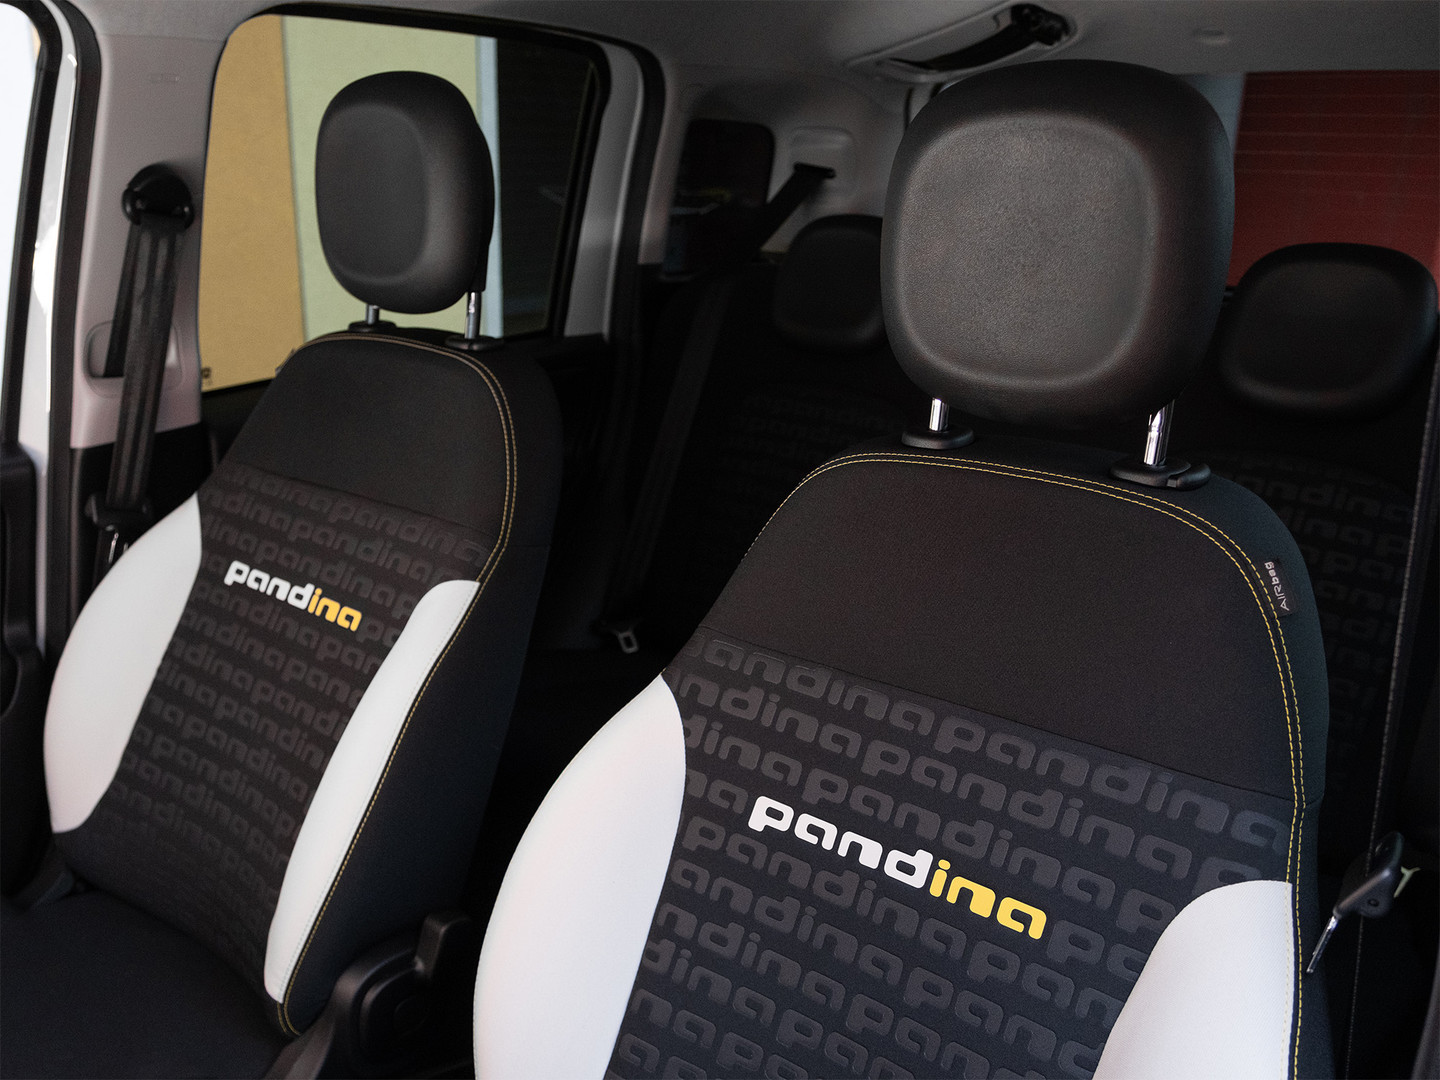 Dettagli interni di Fiat Panda: sedili